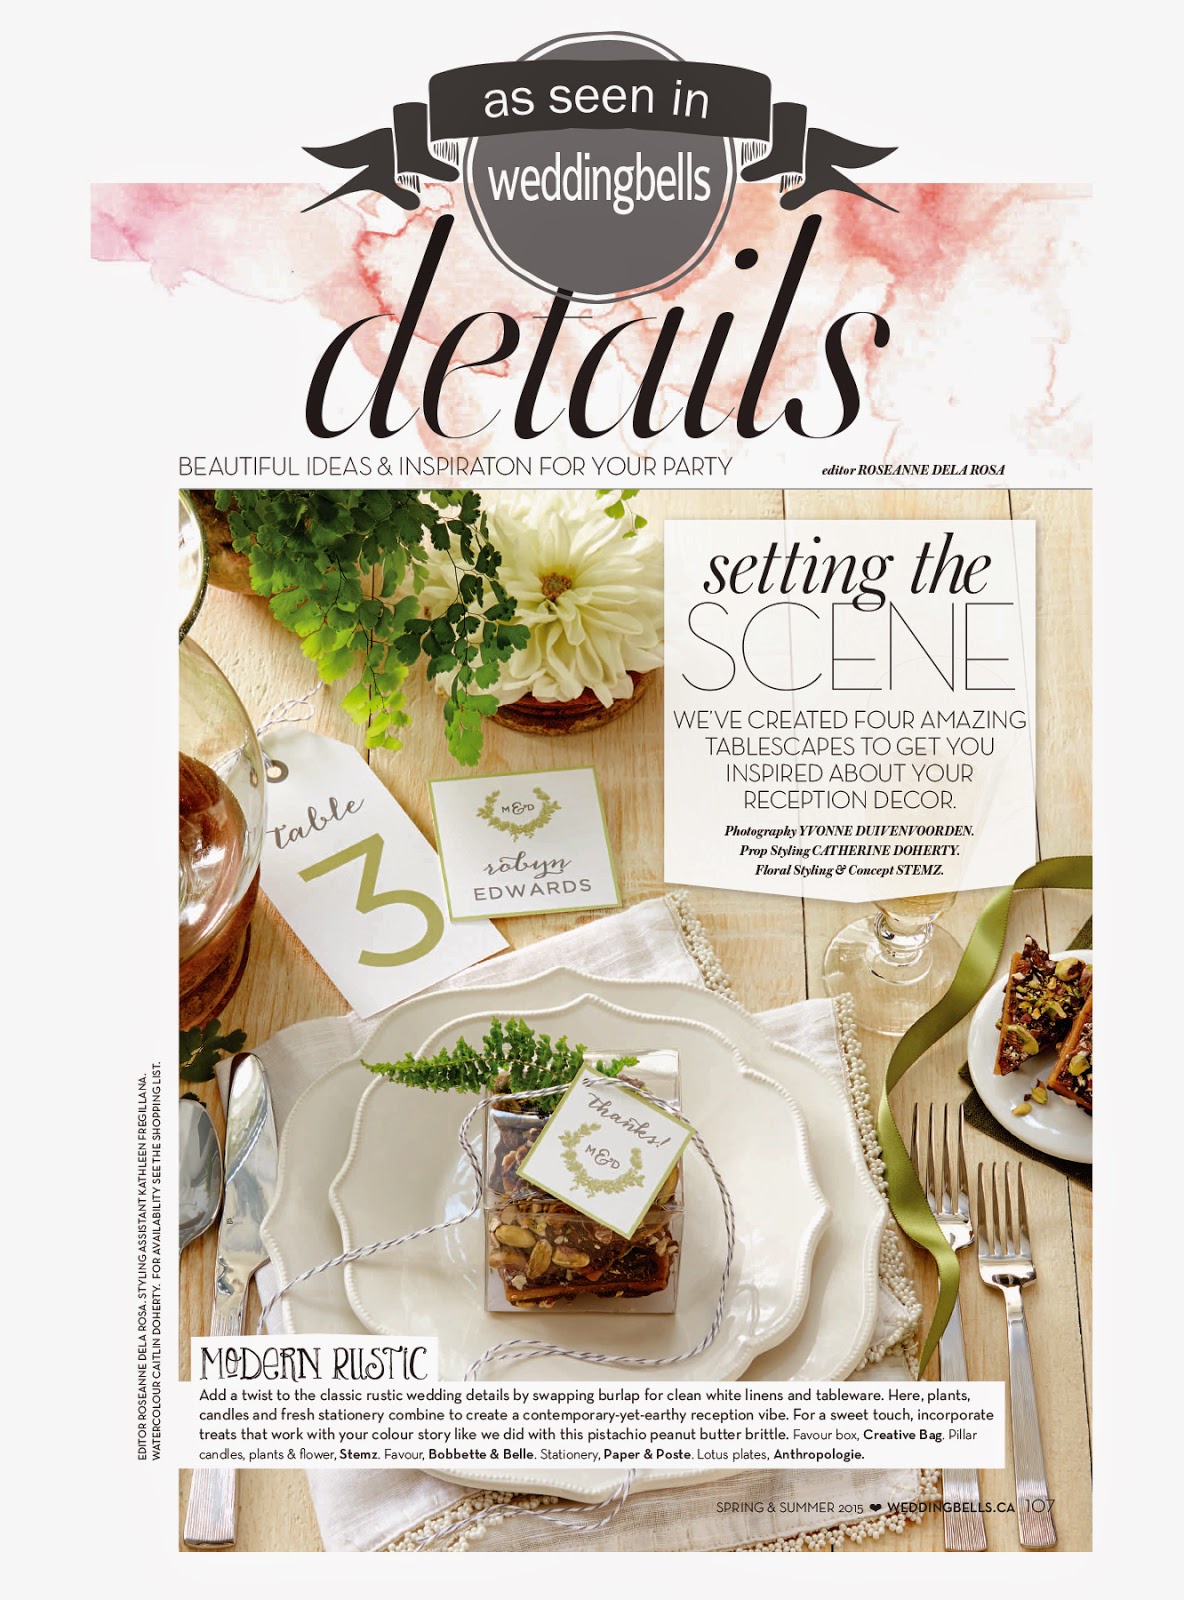 Creative Bag in the media - Weddingbells magazine 